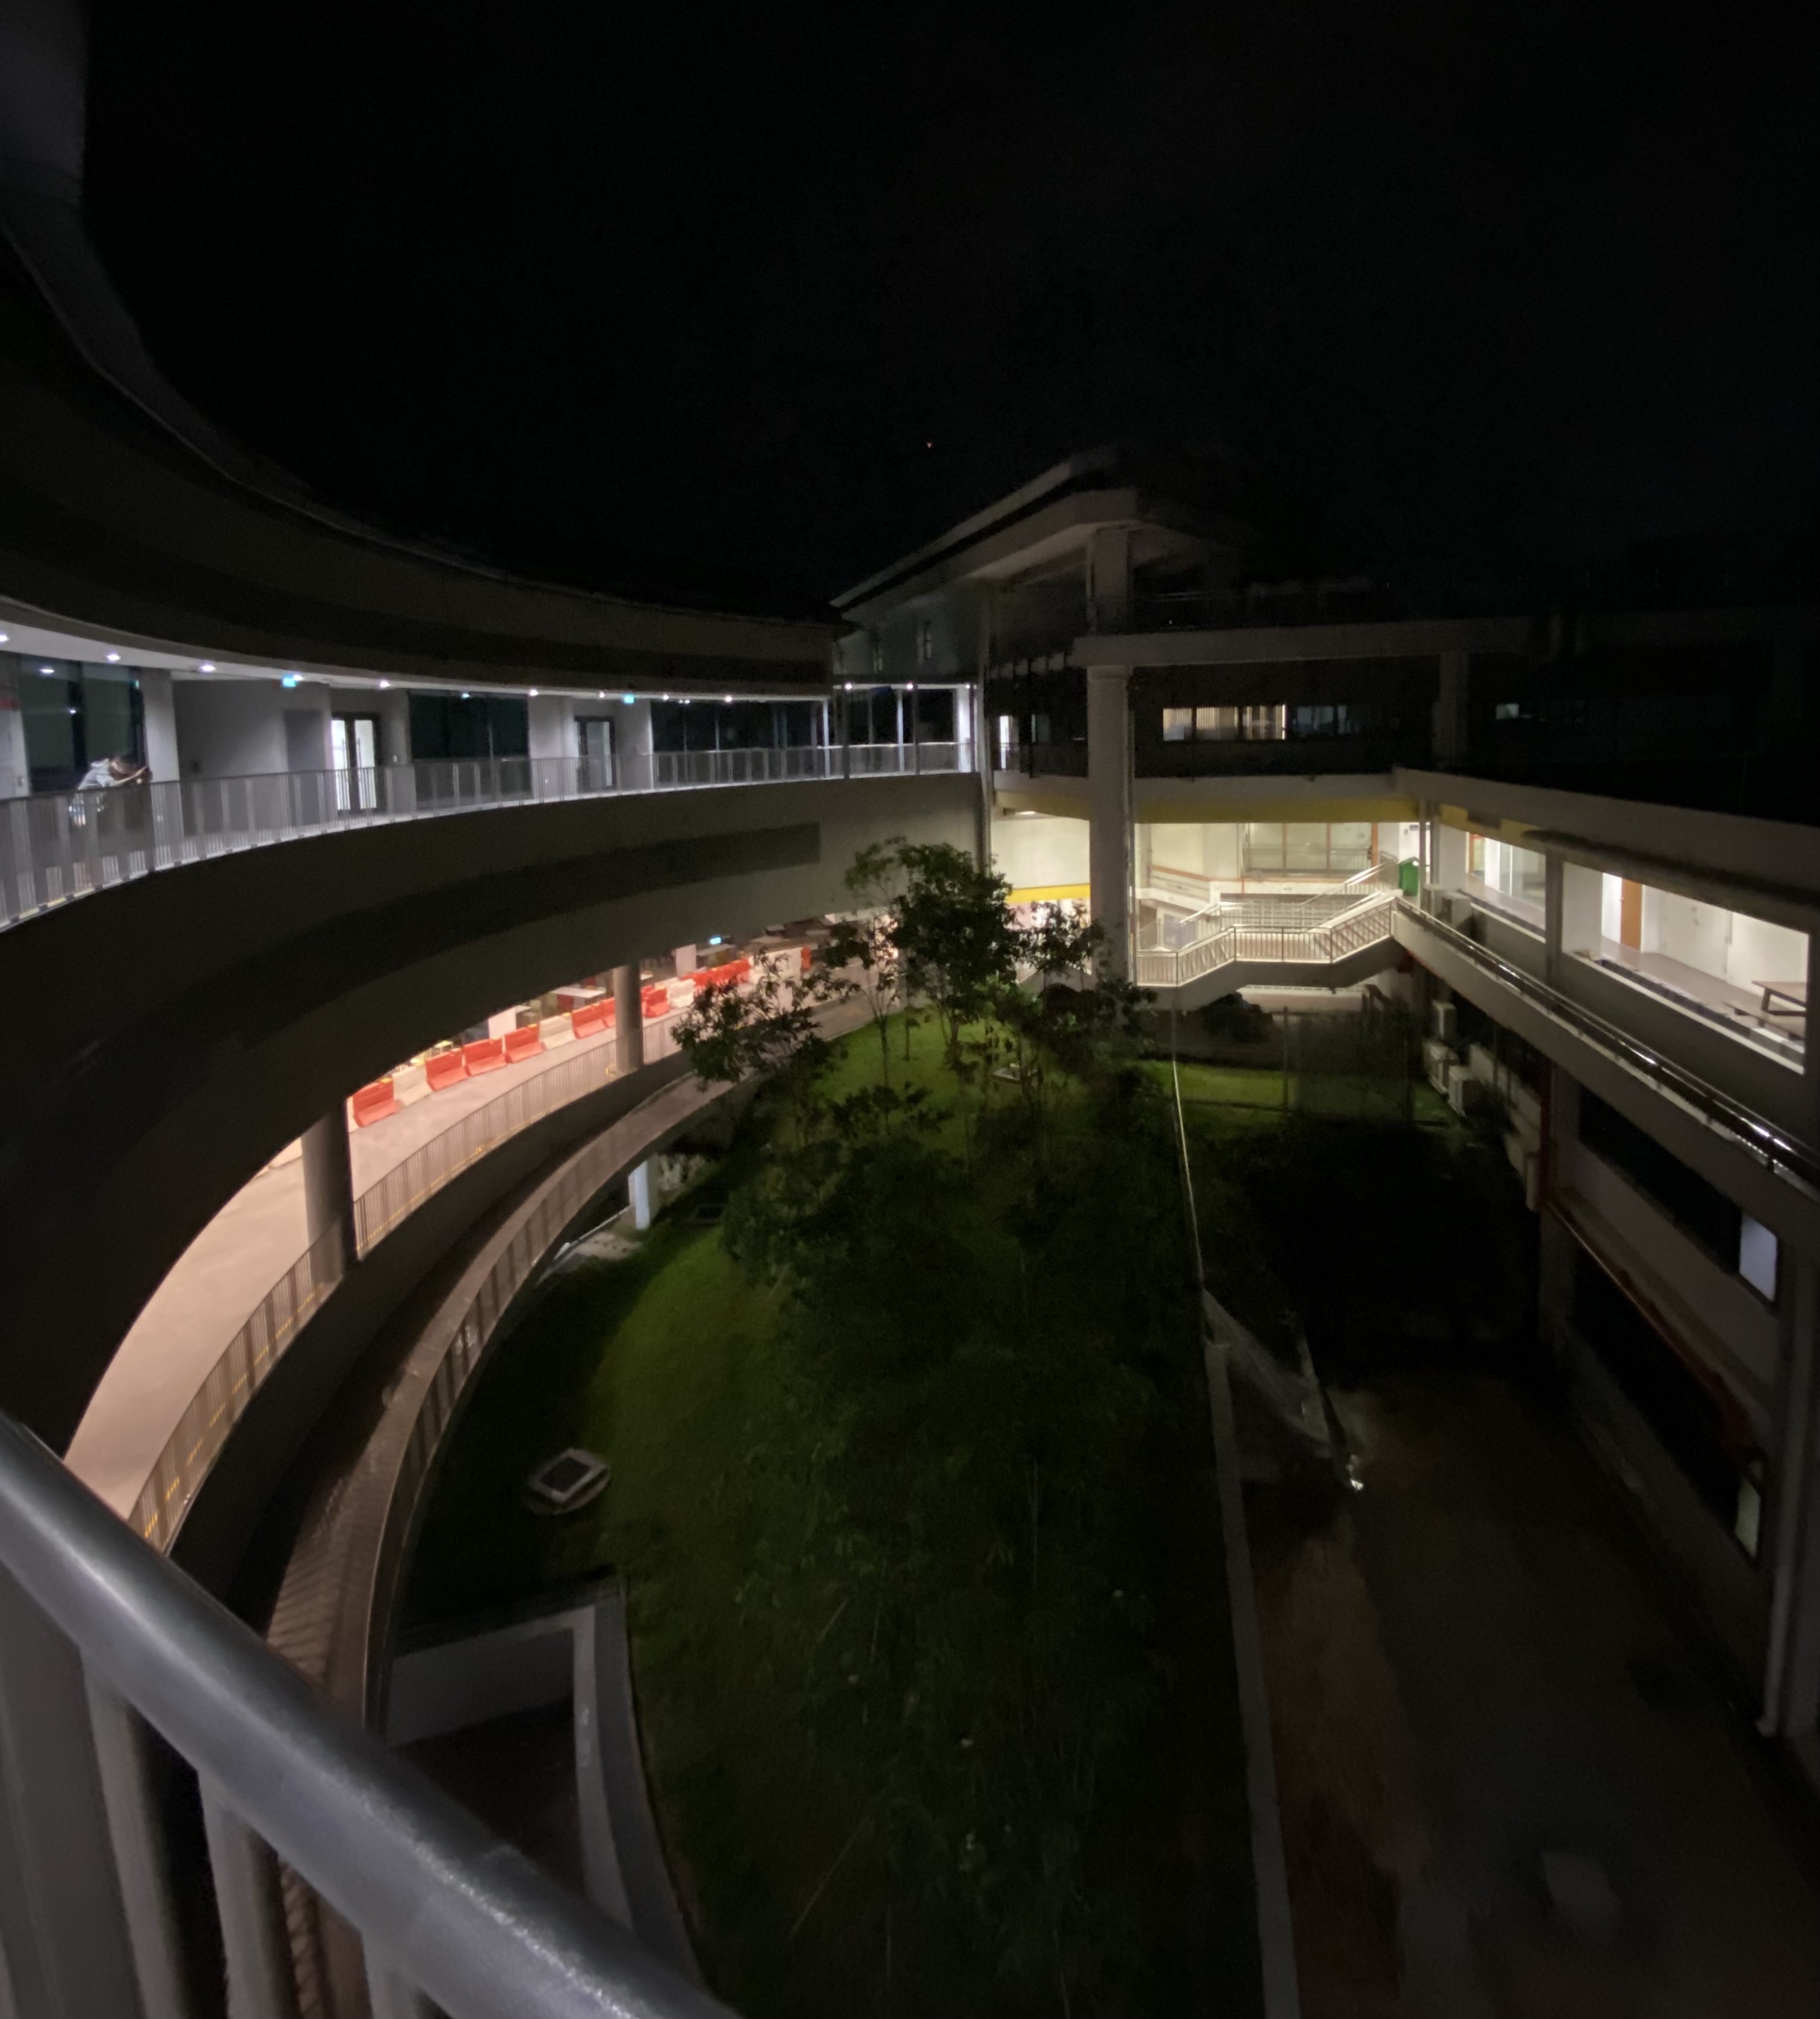 Nighttime around the School of Computing